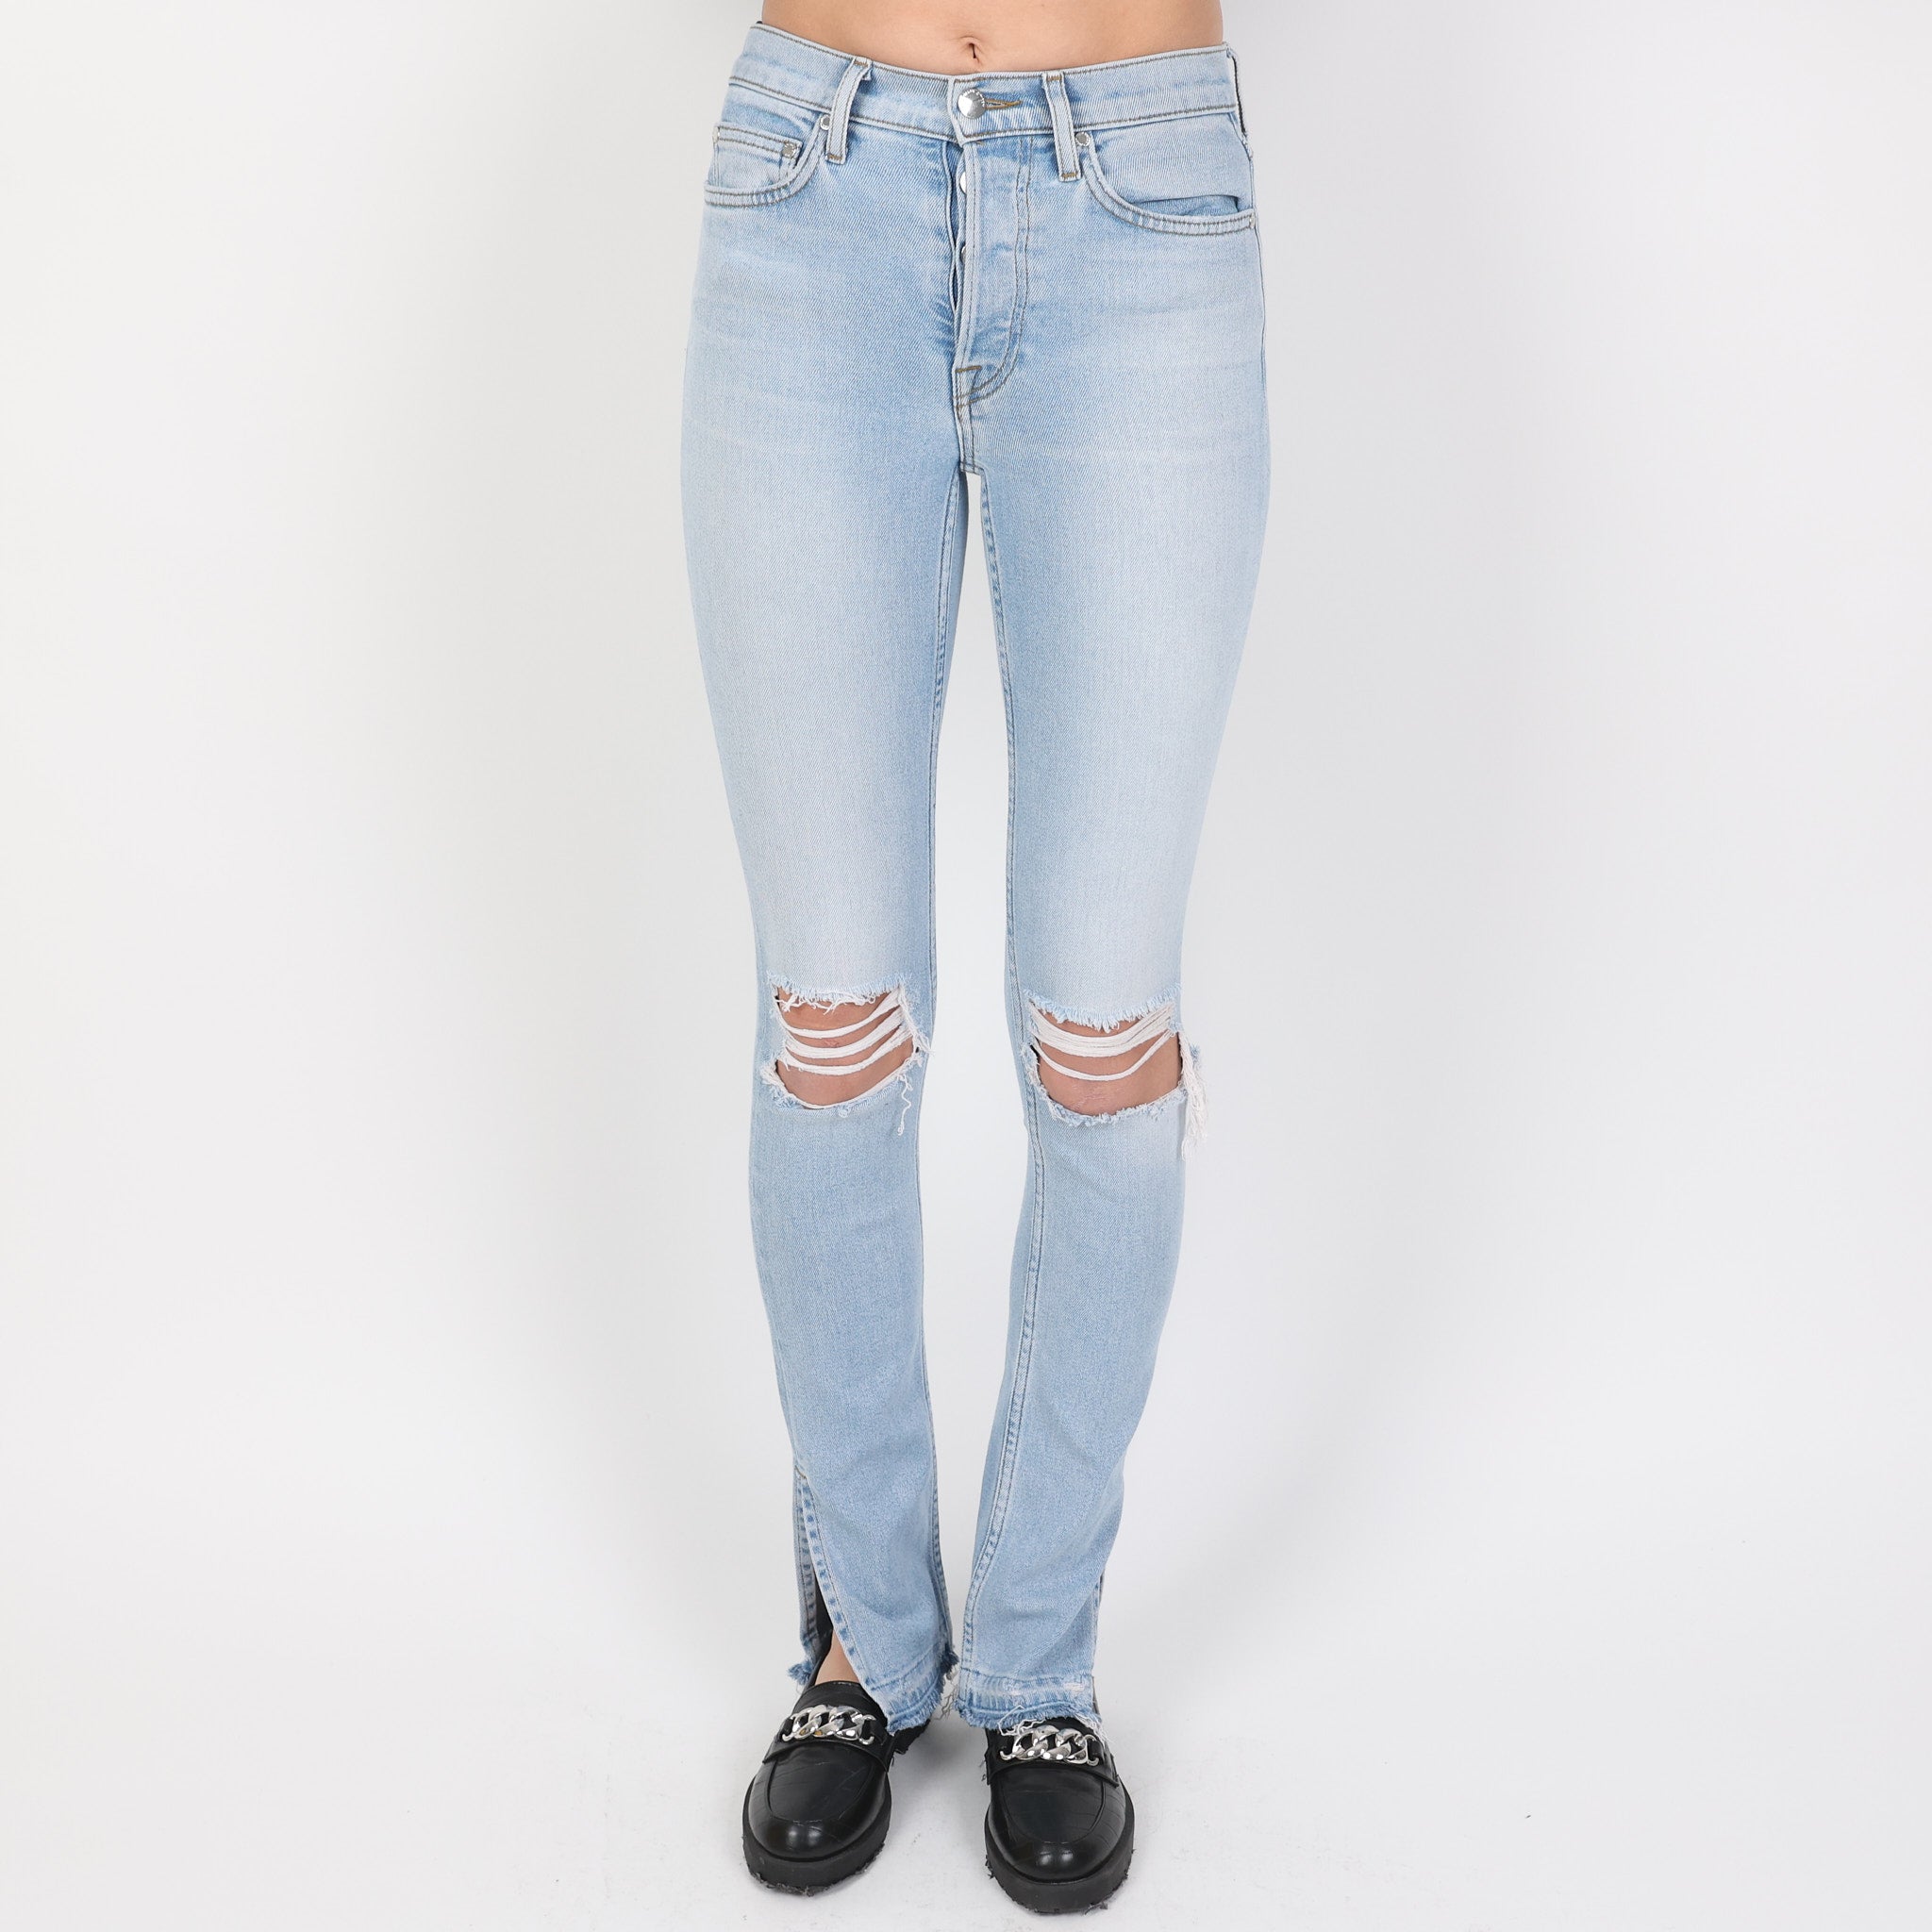 Jeans, Waist 24